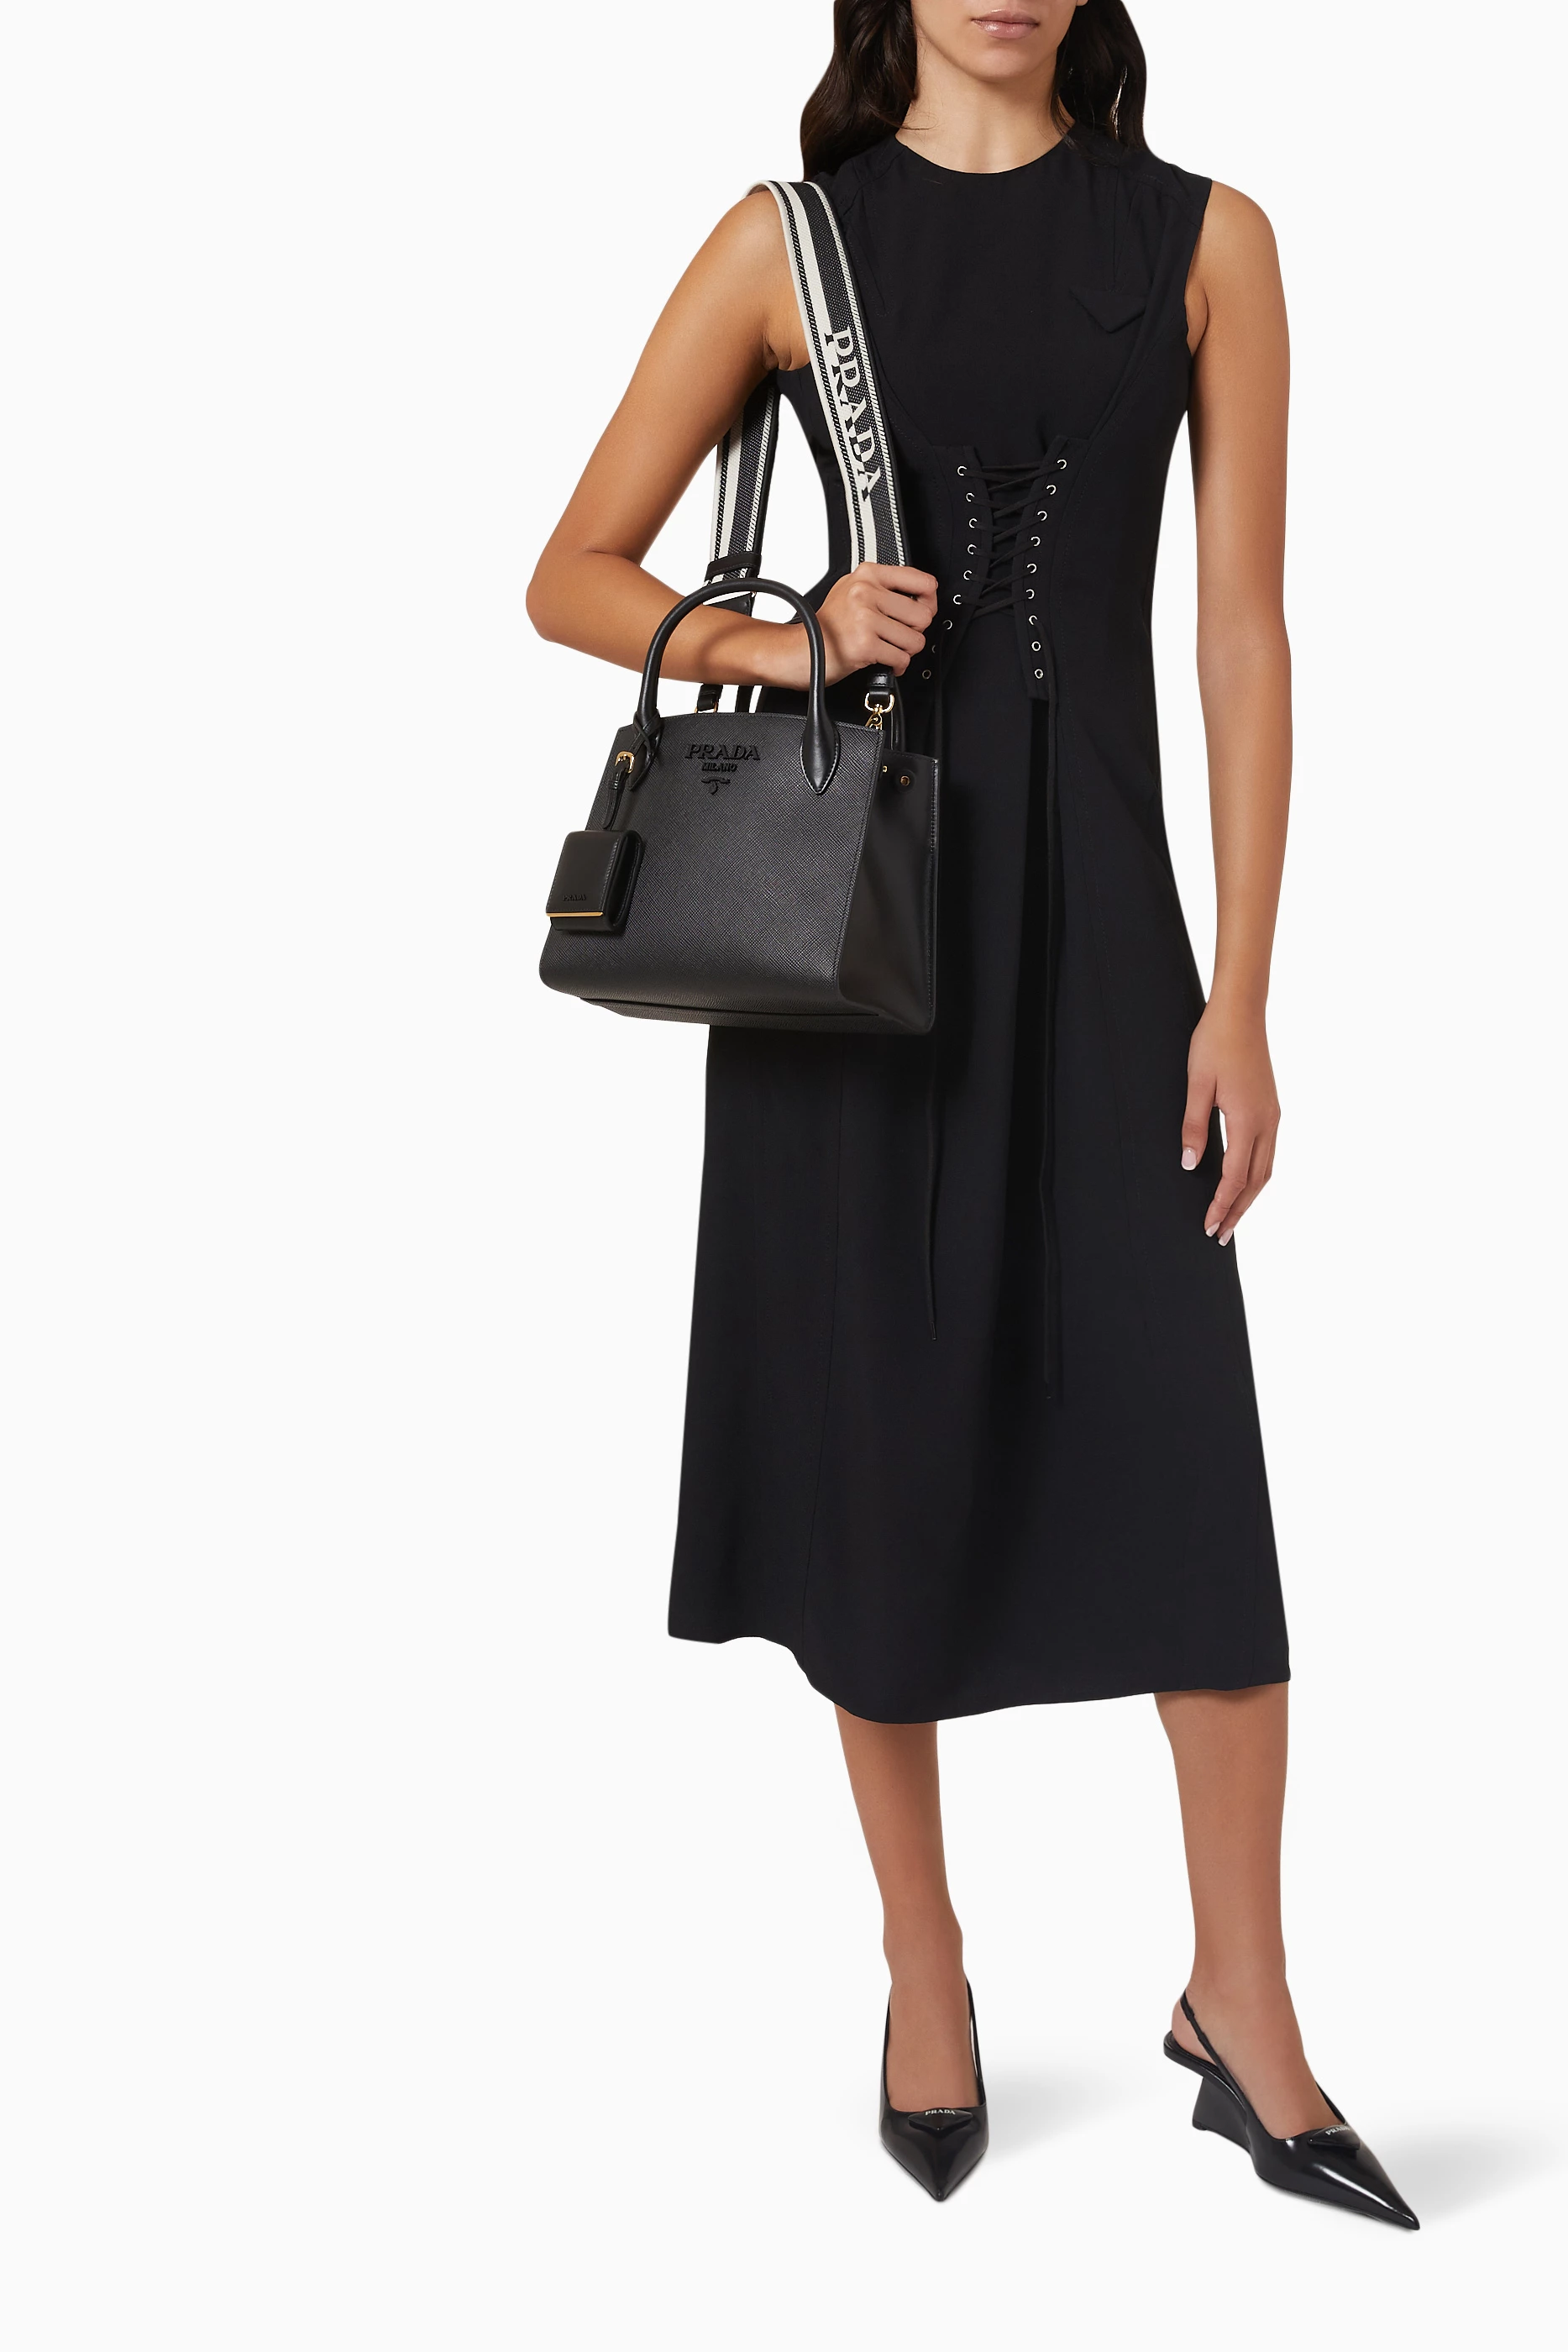 Prada Saffiano Cuir Small Monochrome Handle Bag - Black Handle Bags,  Handbags - PRA864682